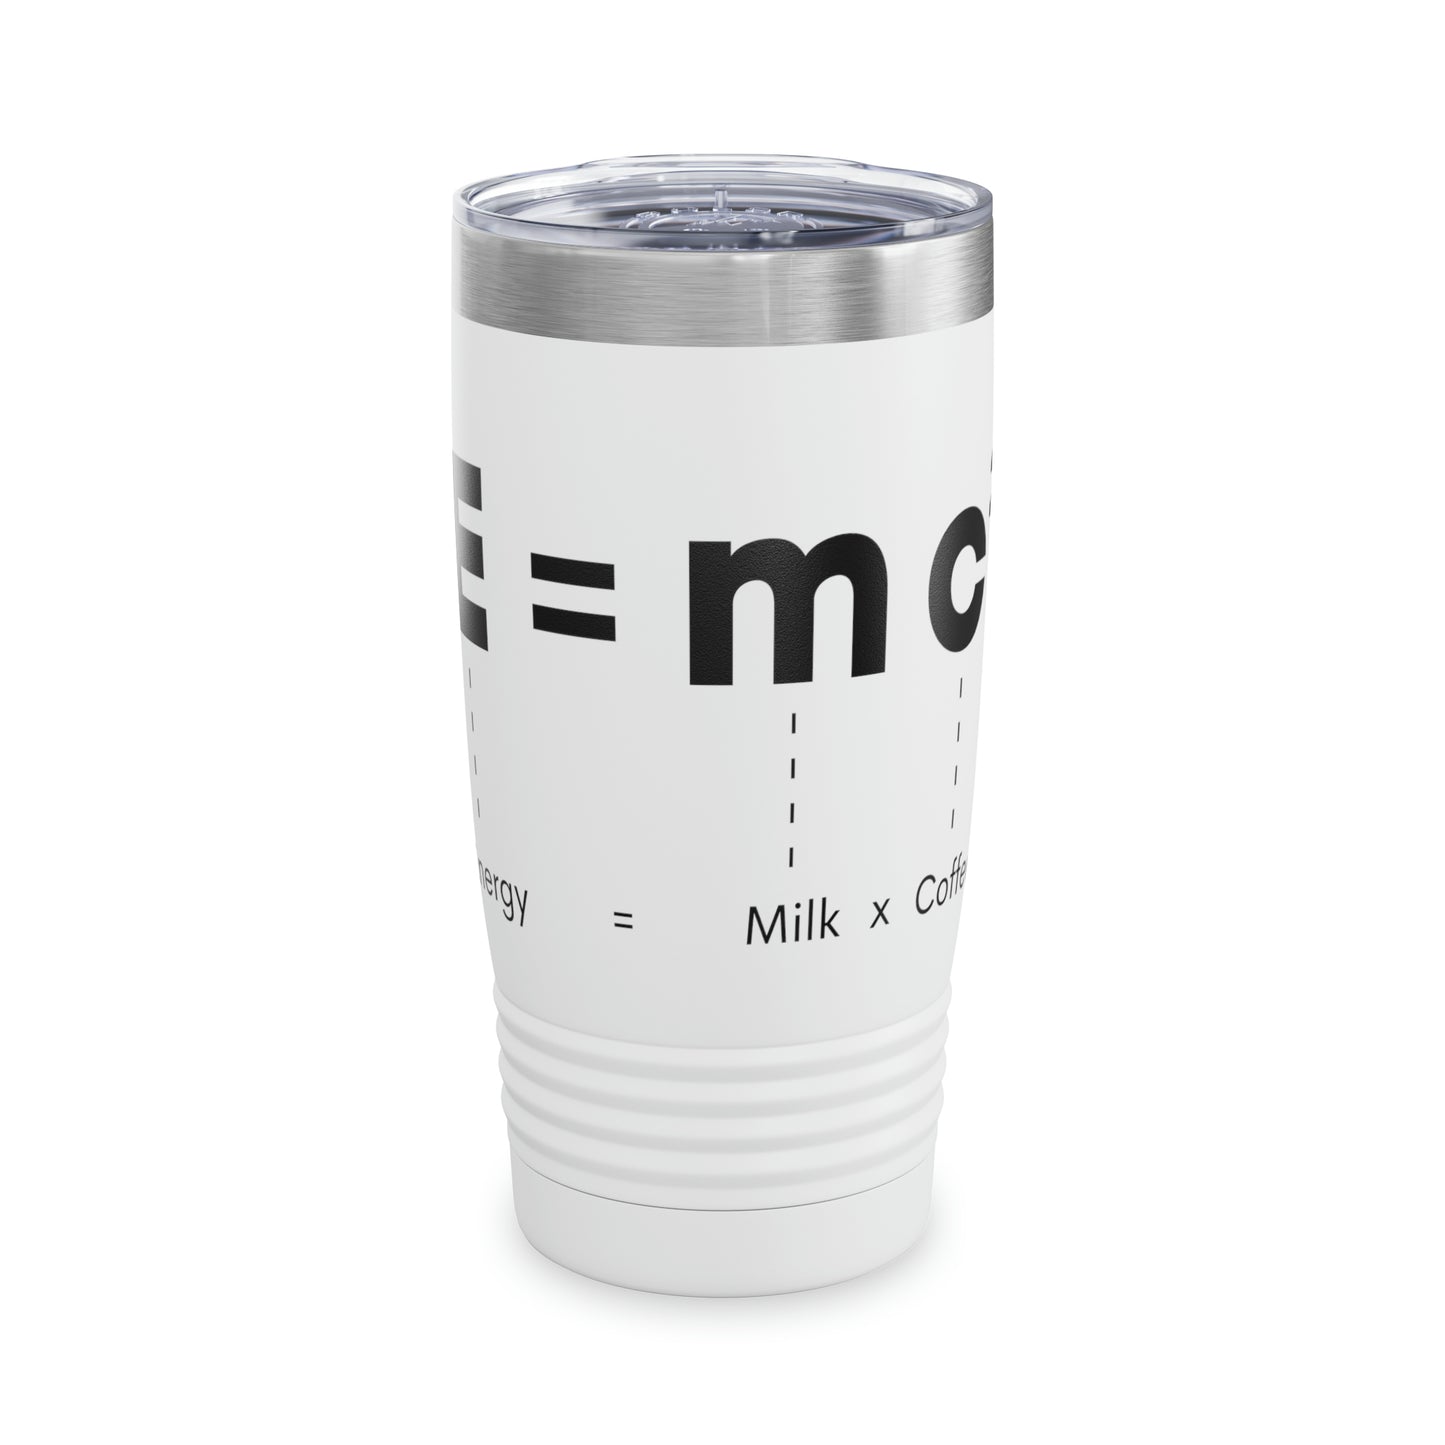 E=mc2 Coffee Ringneck Tumbler, 20oz